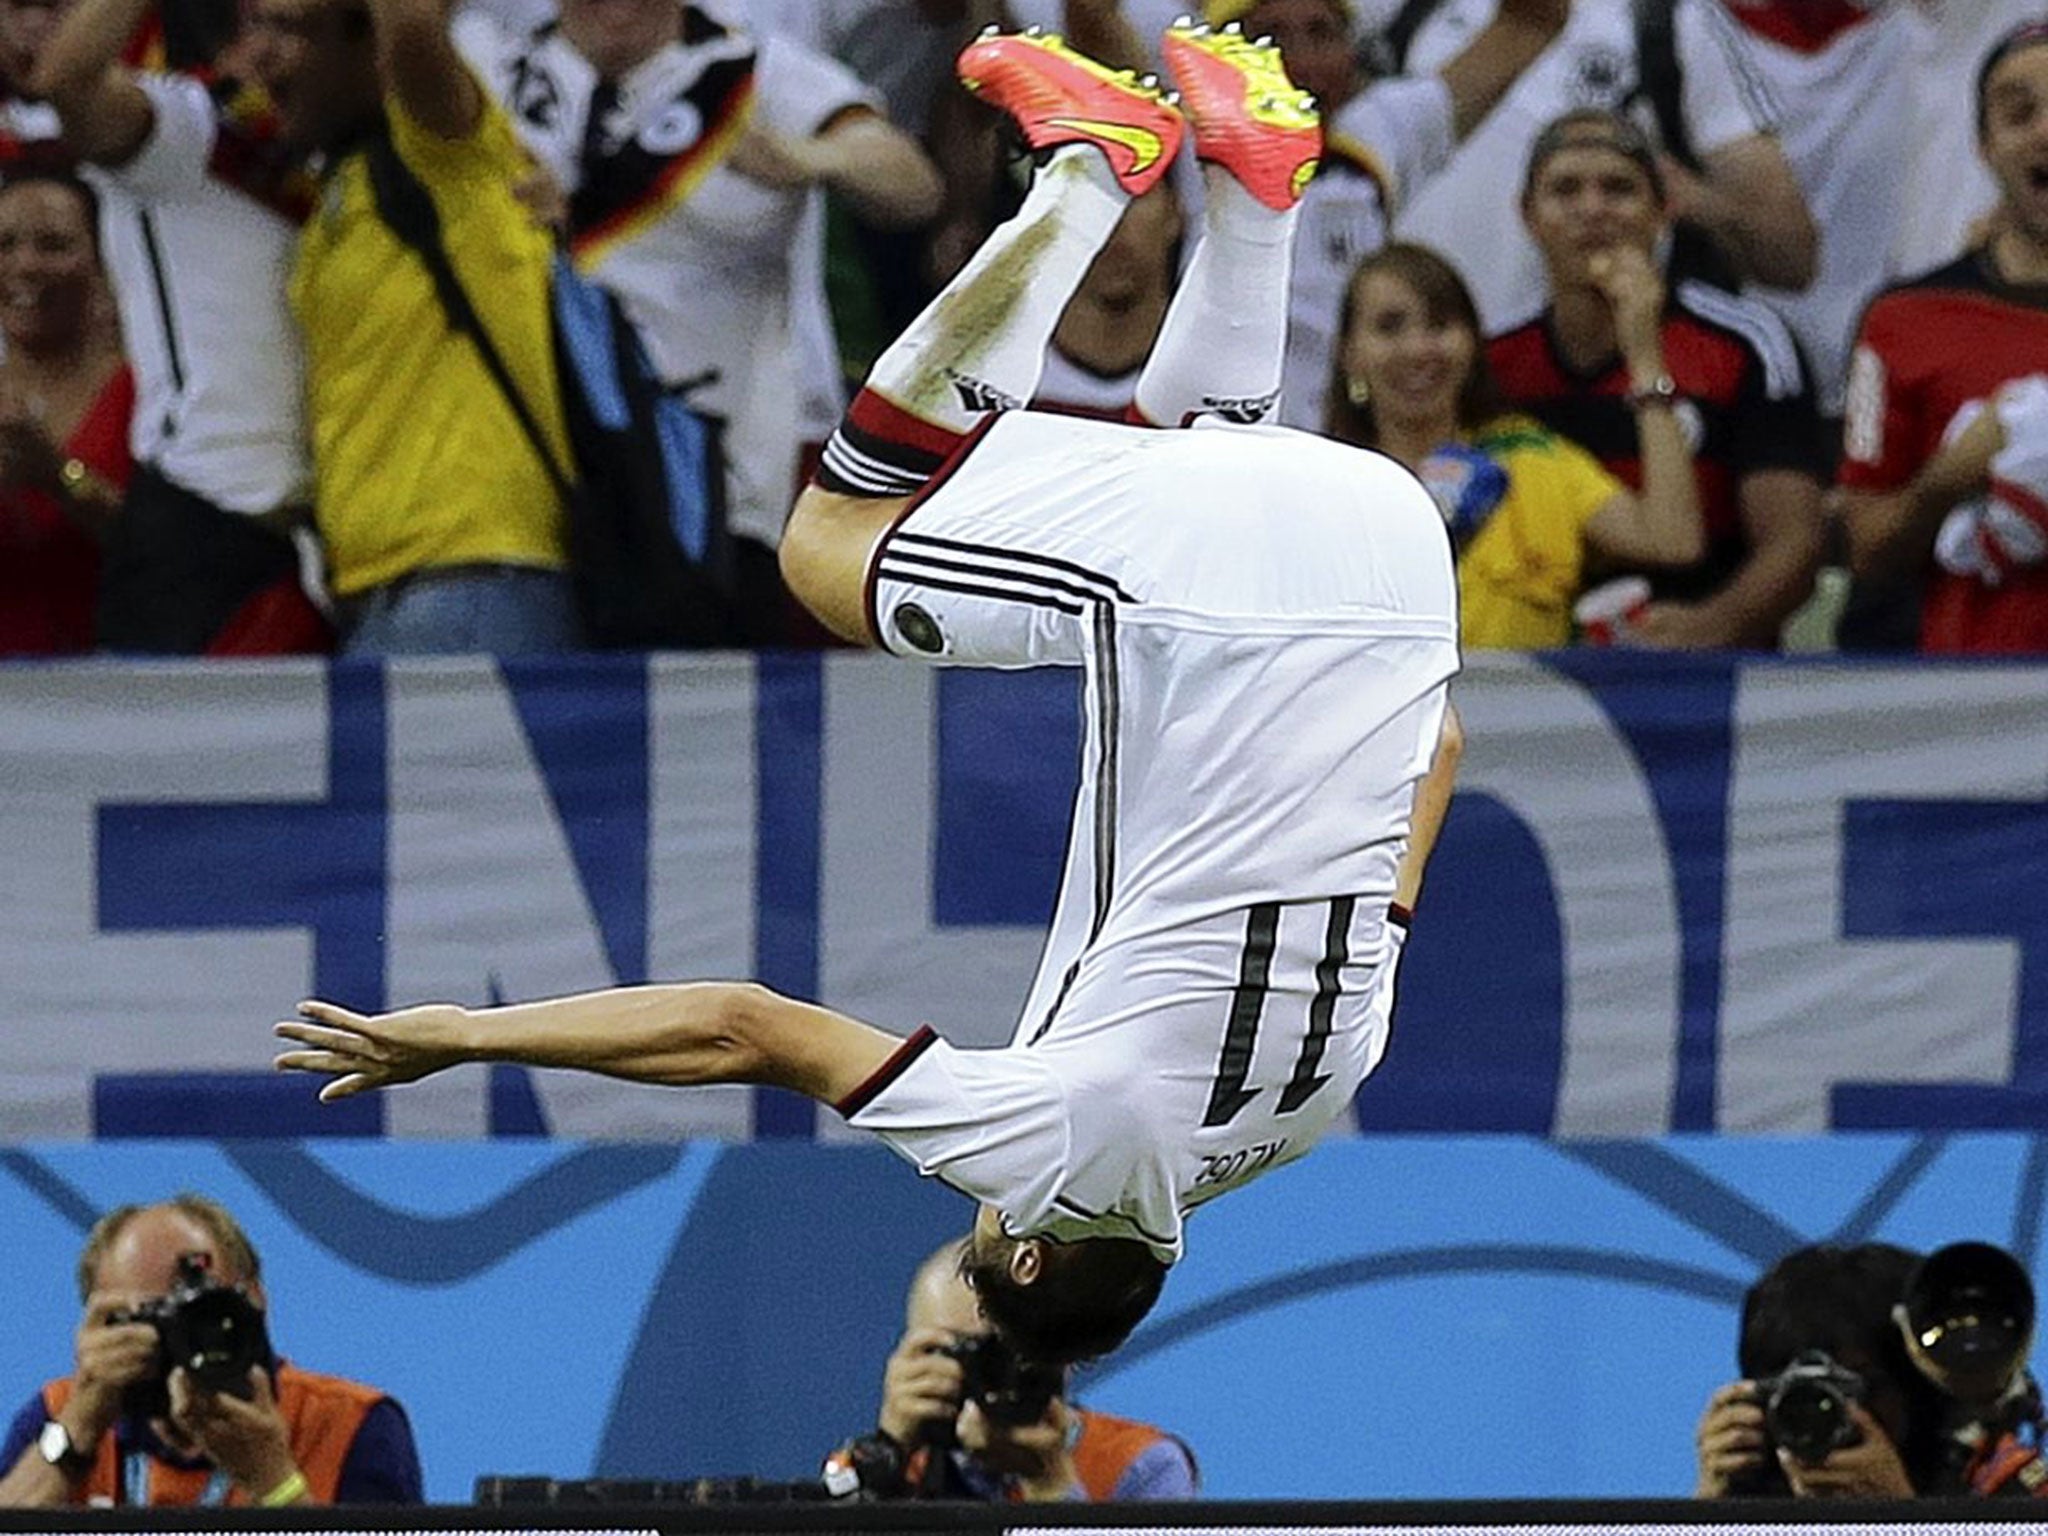 Vorsprung durch Klose: Germany’s veteran striker Miroslav Klose does a flying somersault to celebrate his equaliser